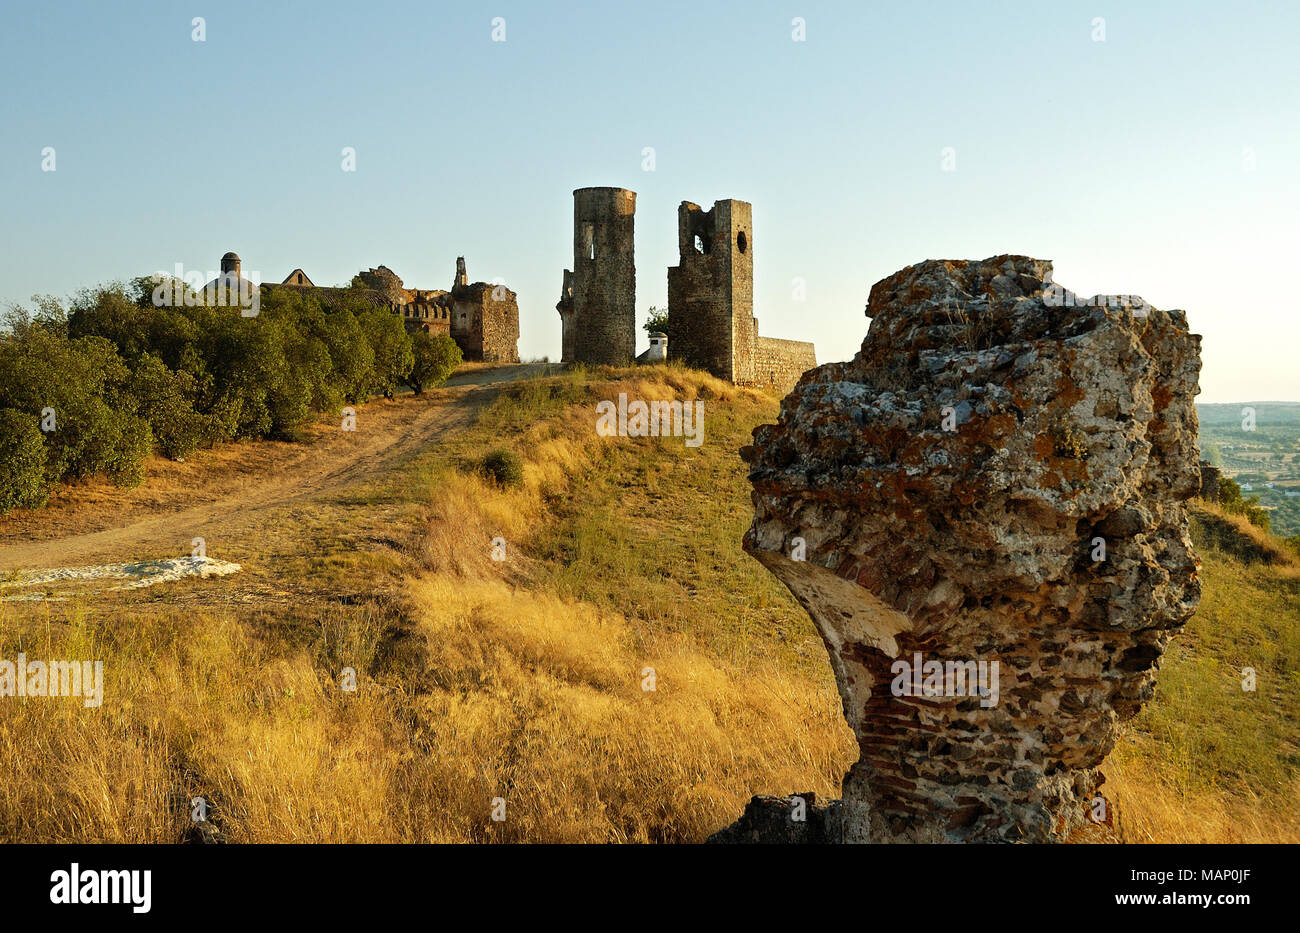 Das Schloss von Montemor-o-Novo. Alentejo, Portugal Stockfoto